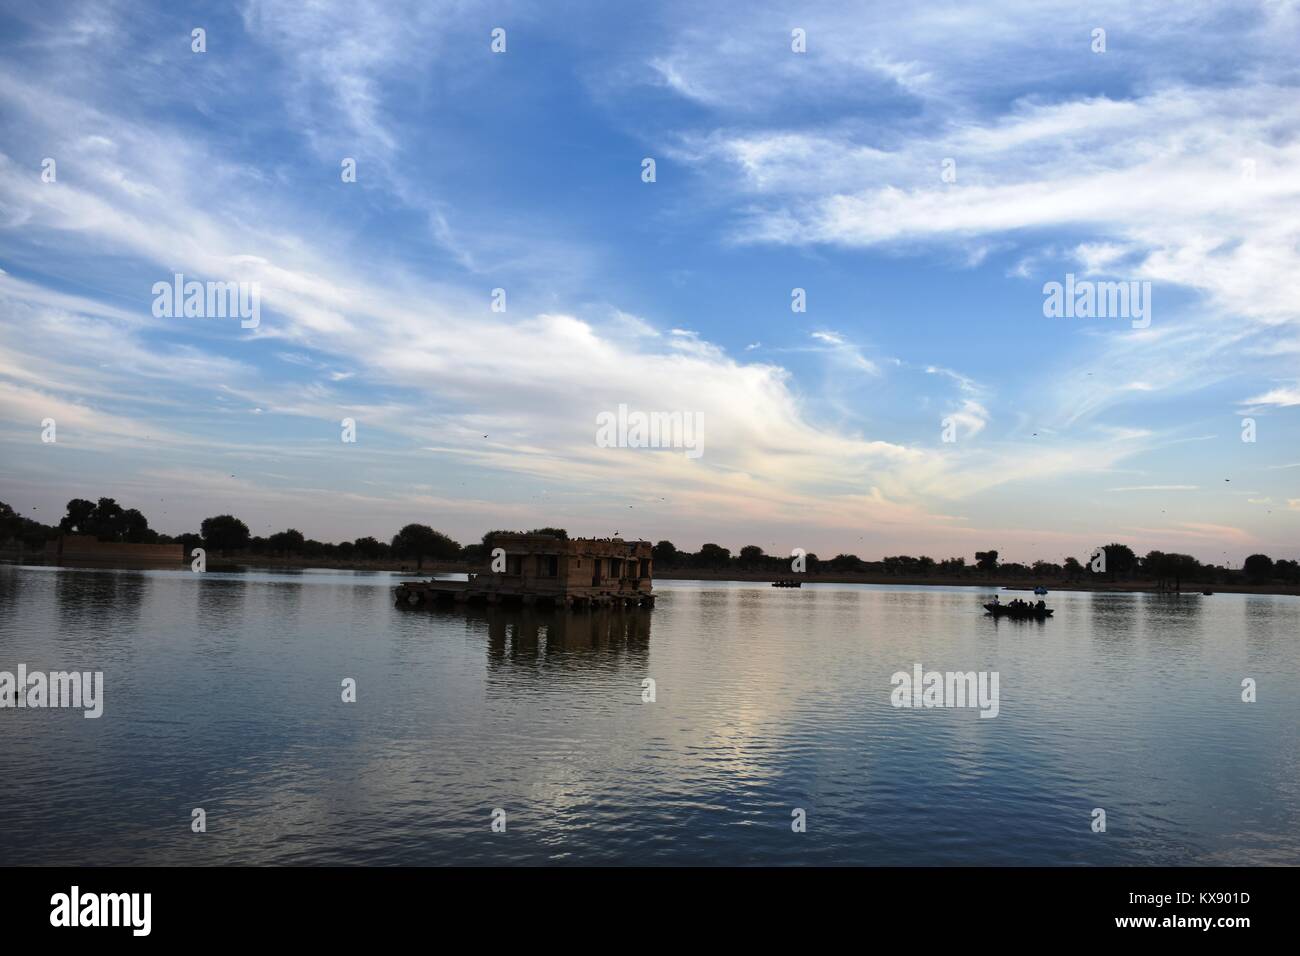 Monument historique de gadisar lake jaisalmer rajasthan inde Banque D'Images